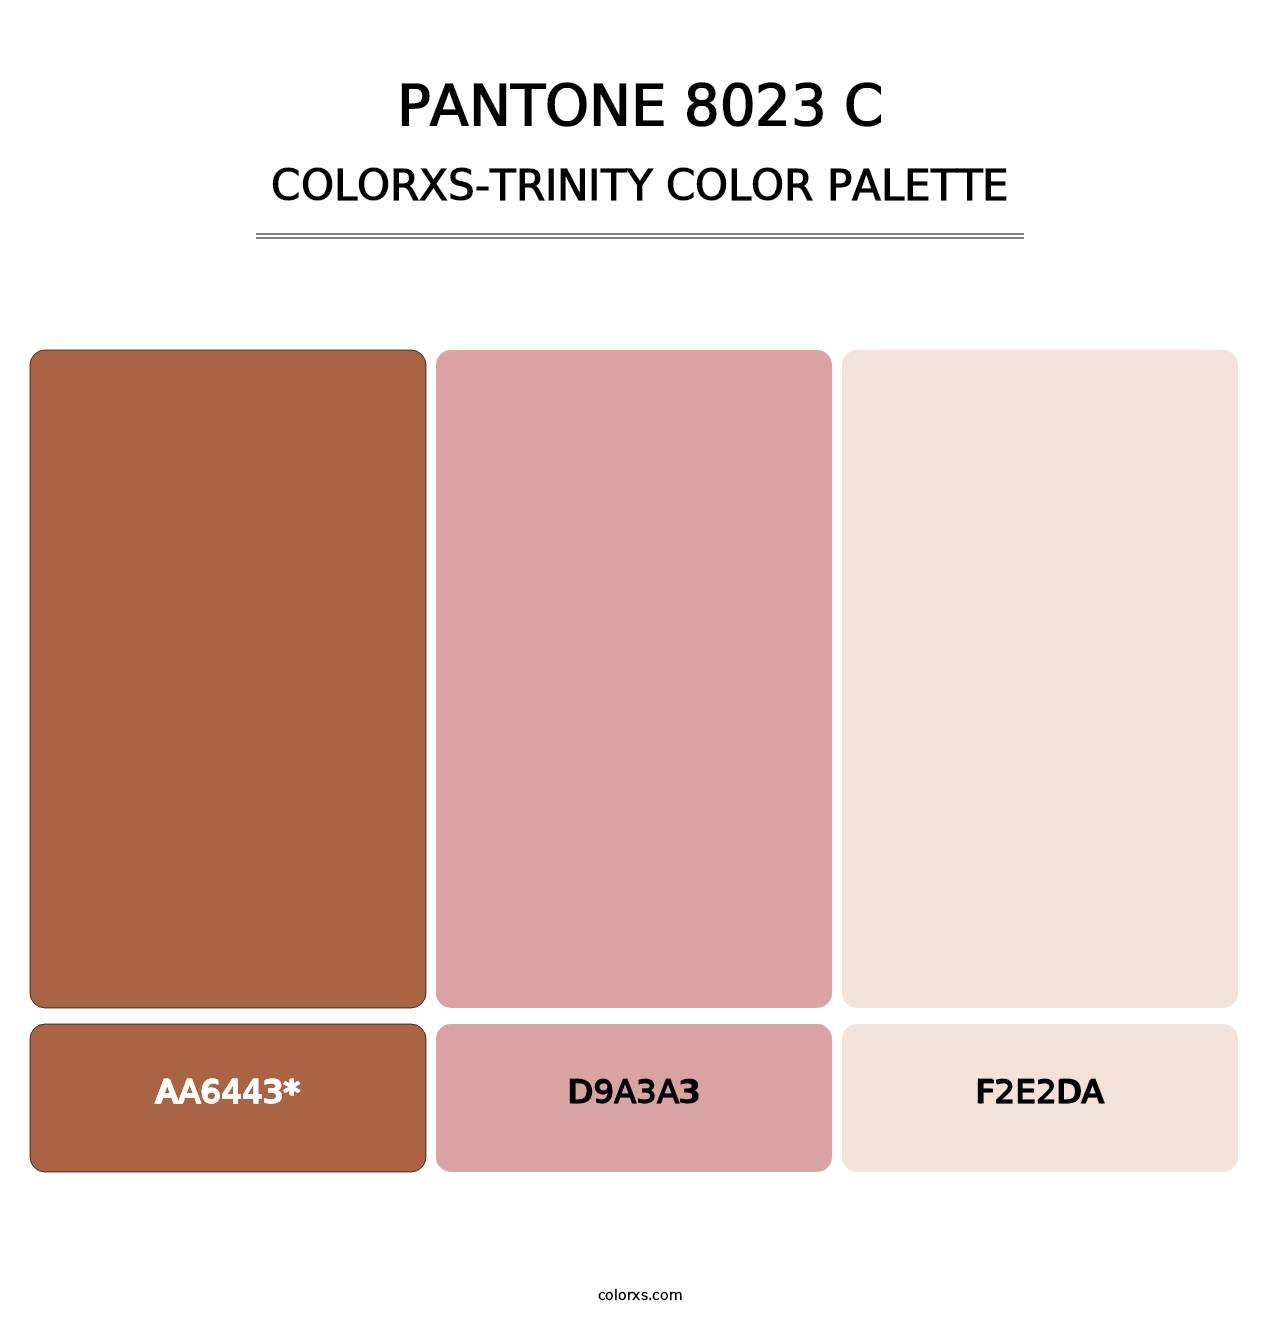 PANTONE 8023 C - Colorxs Trinity Palette